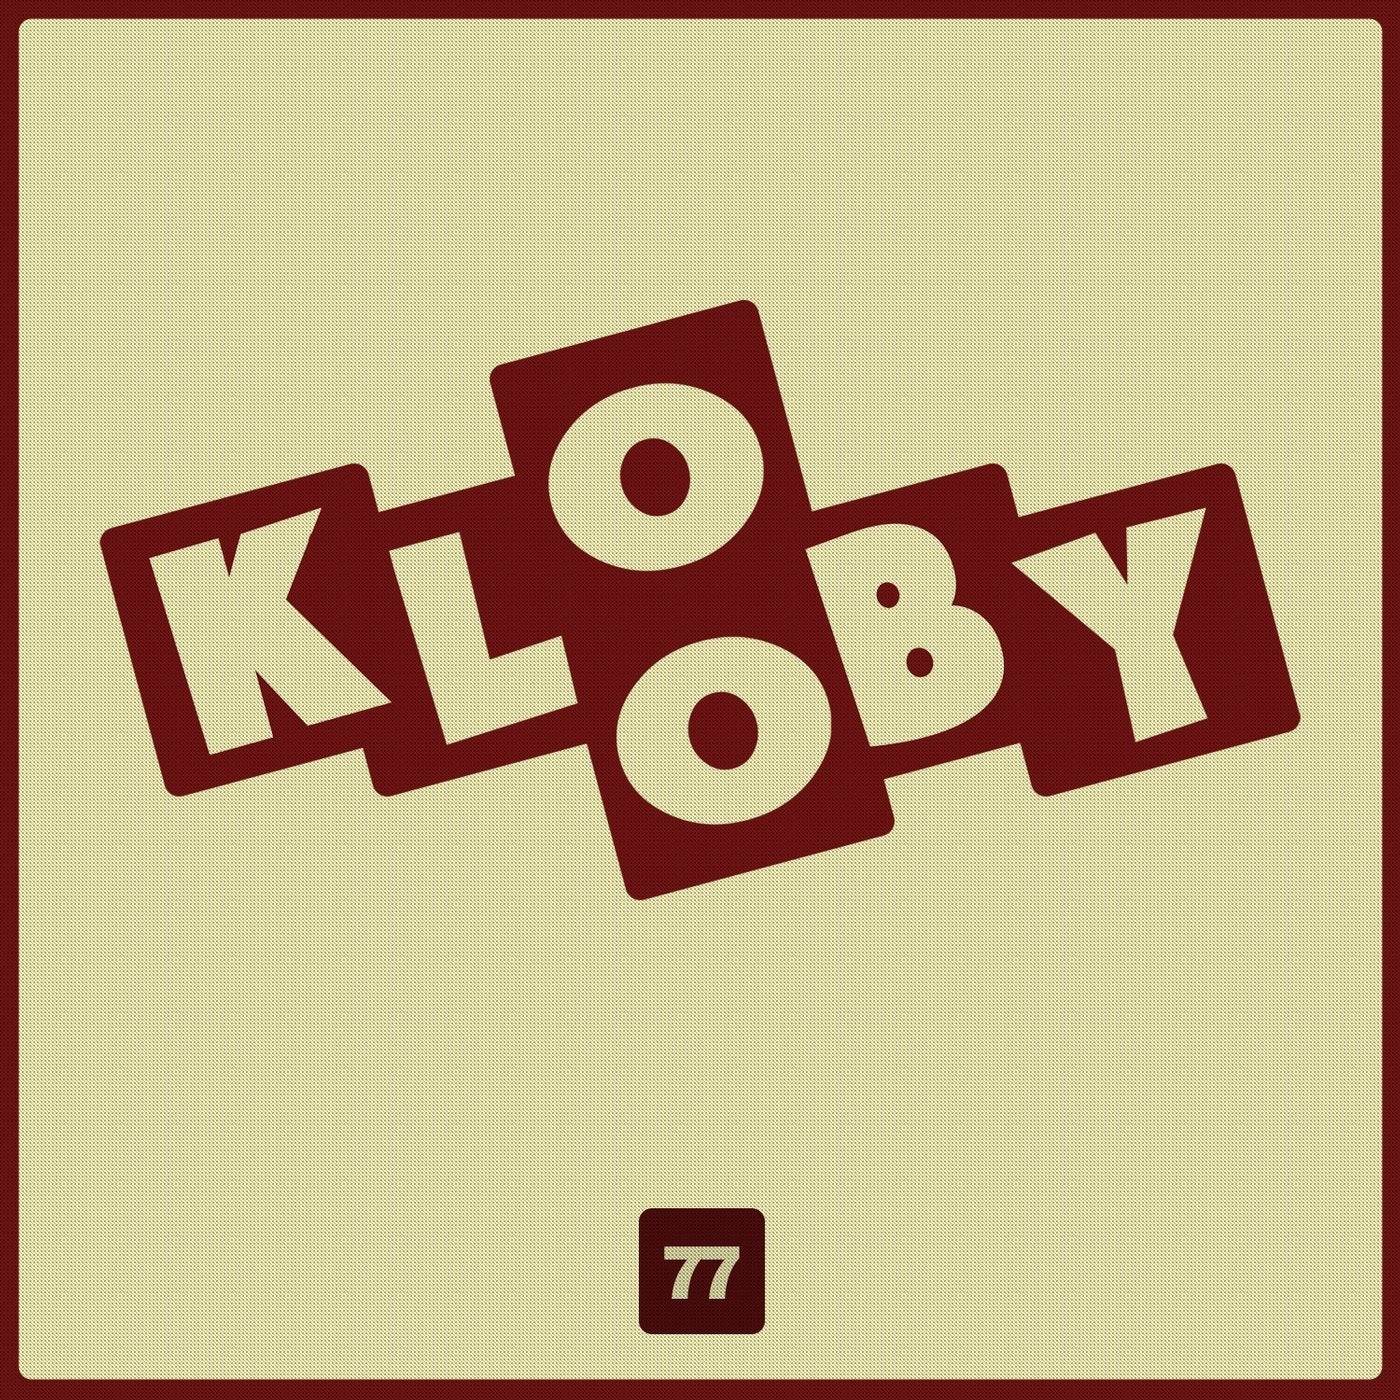 Klooby, Vol.77